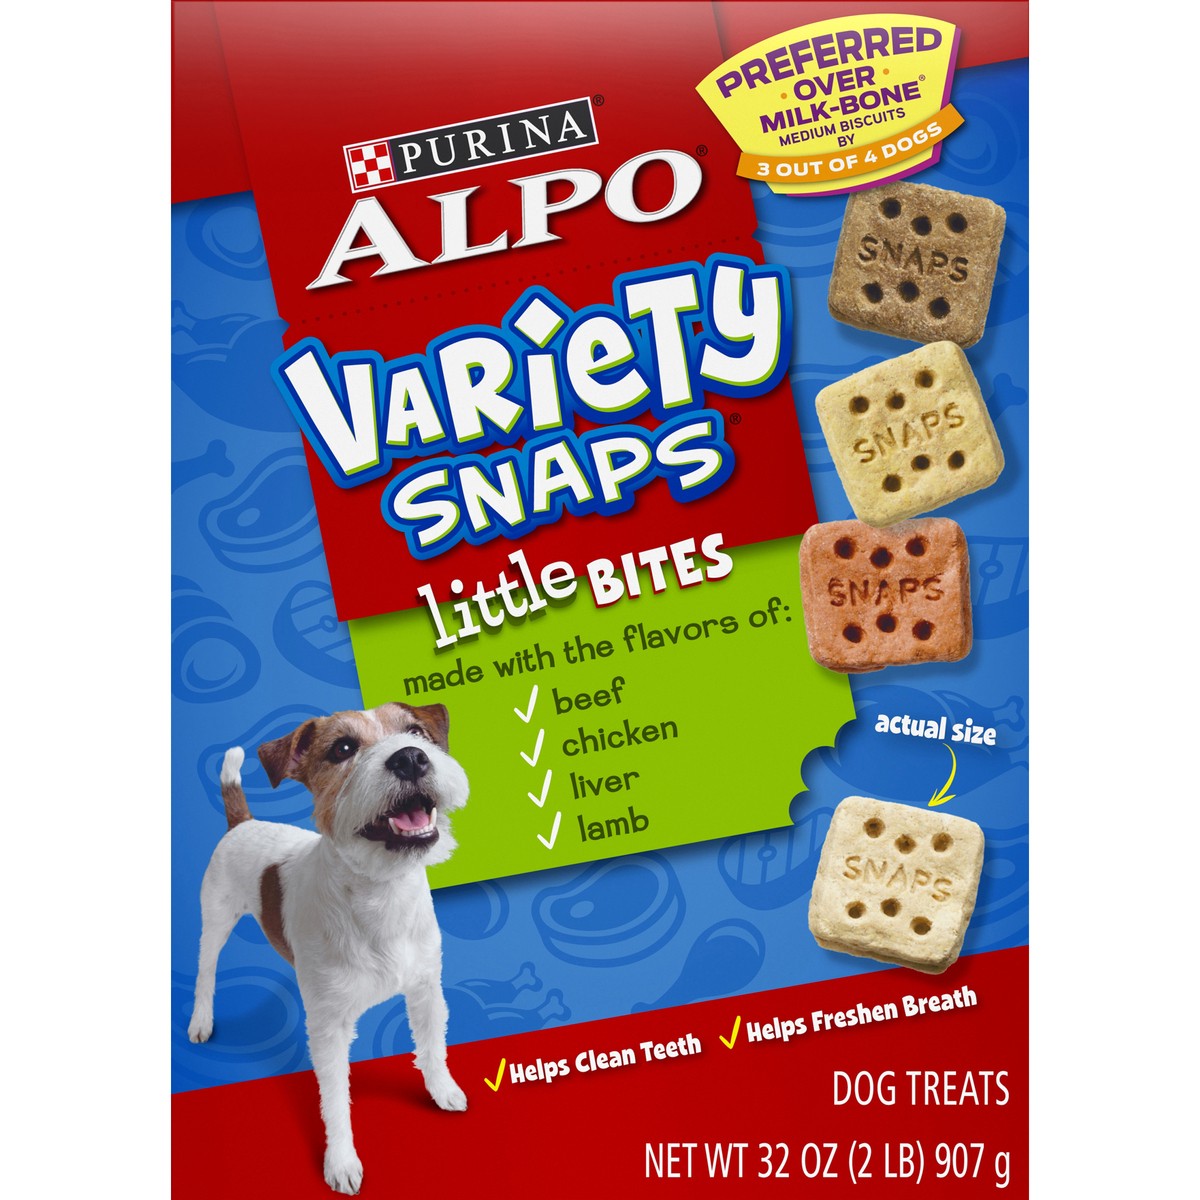 slide 6 of 9, ALPO Purina ALPO Dog Treats, Variety Snaps Little Bites Beef, Chicken, Liver, Lamb - 32 oz. Box, 32 oz